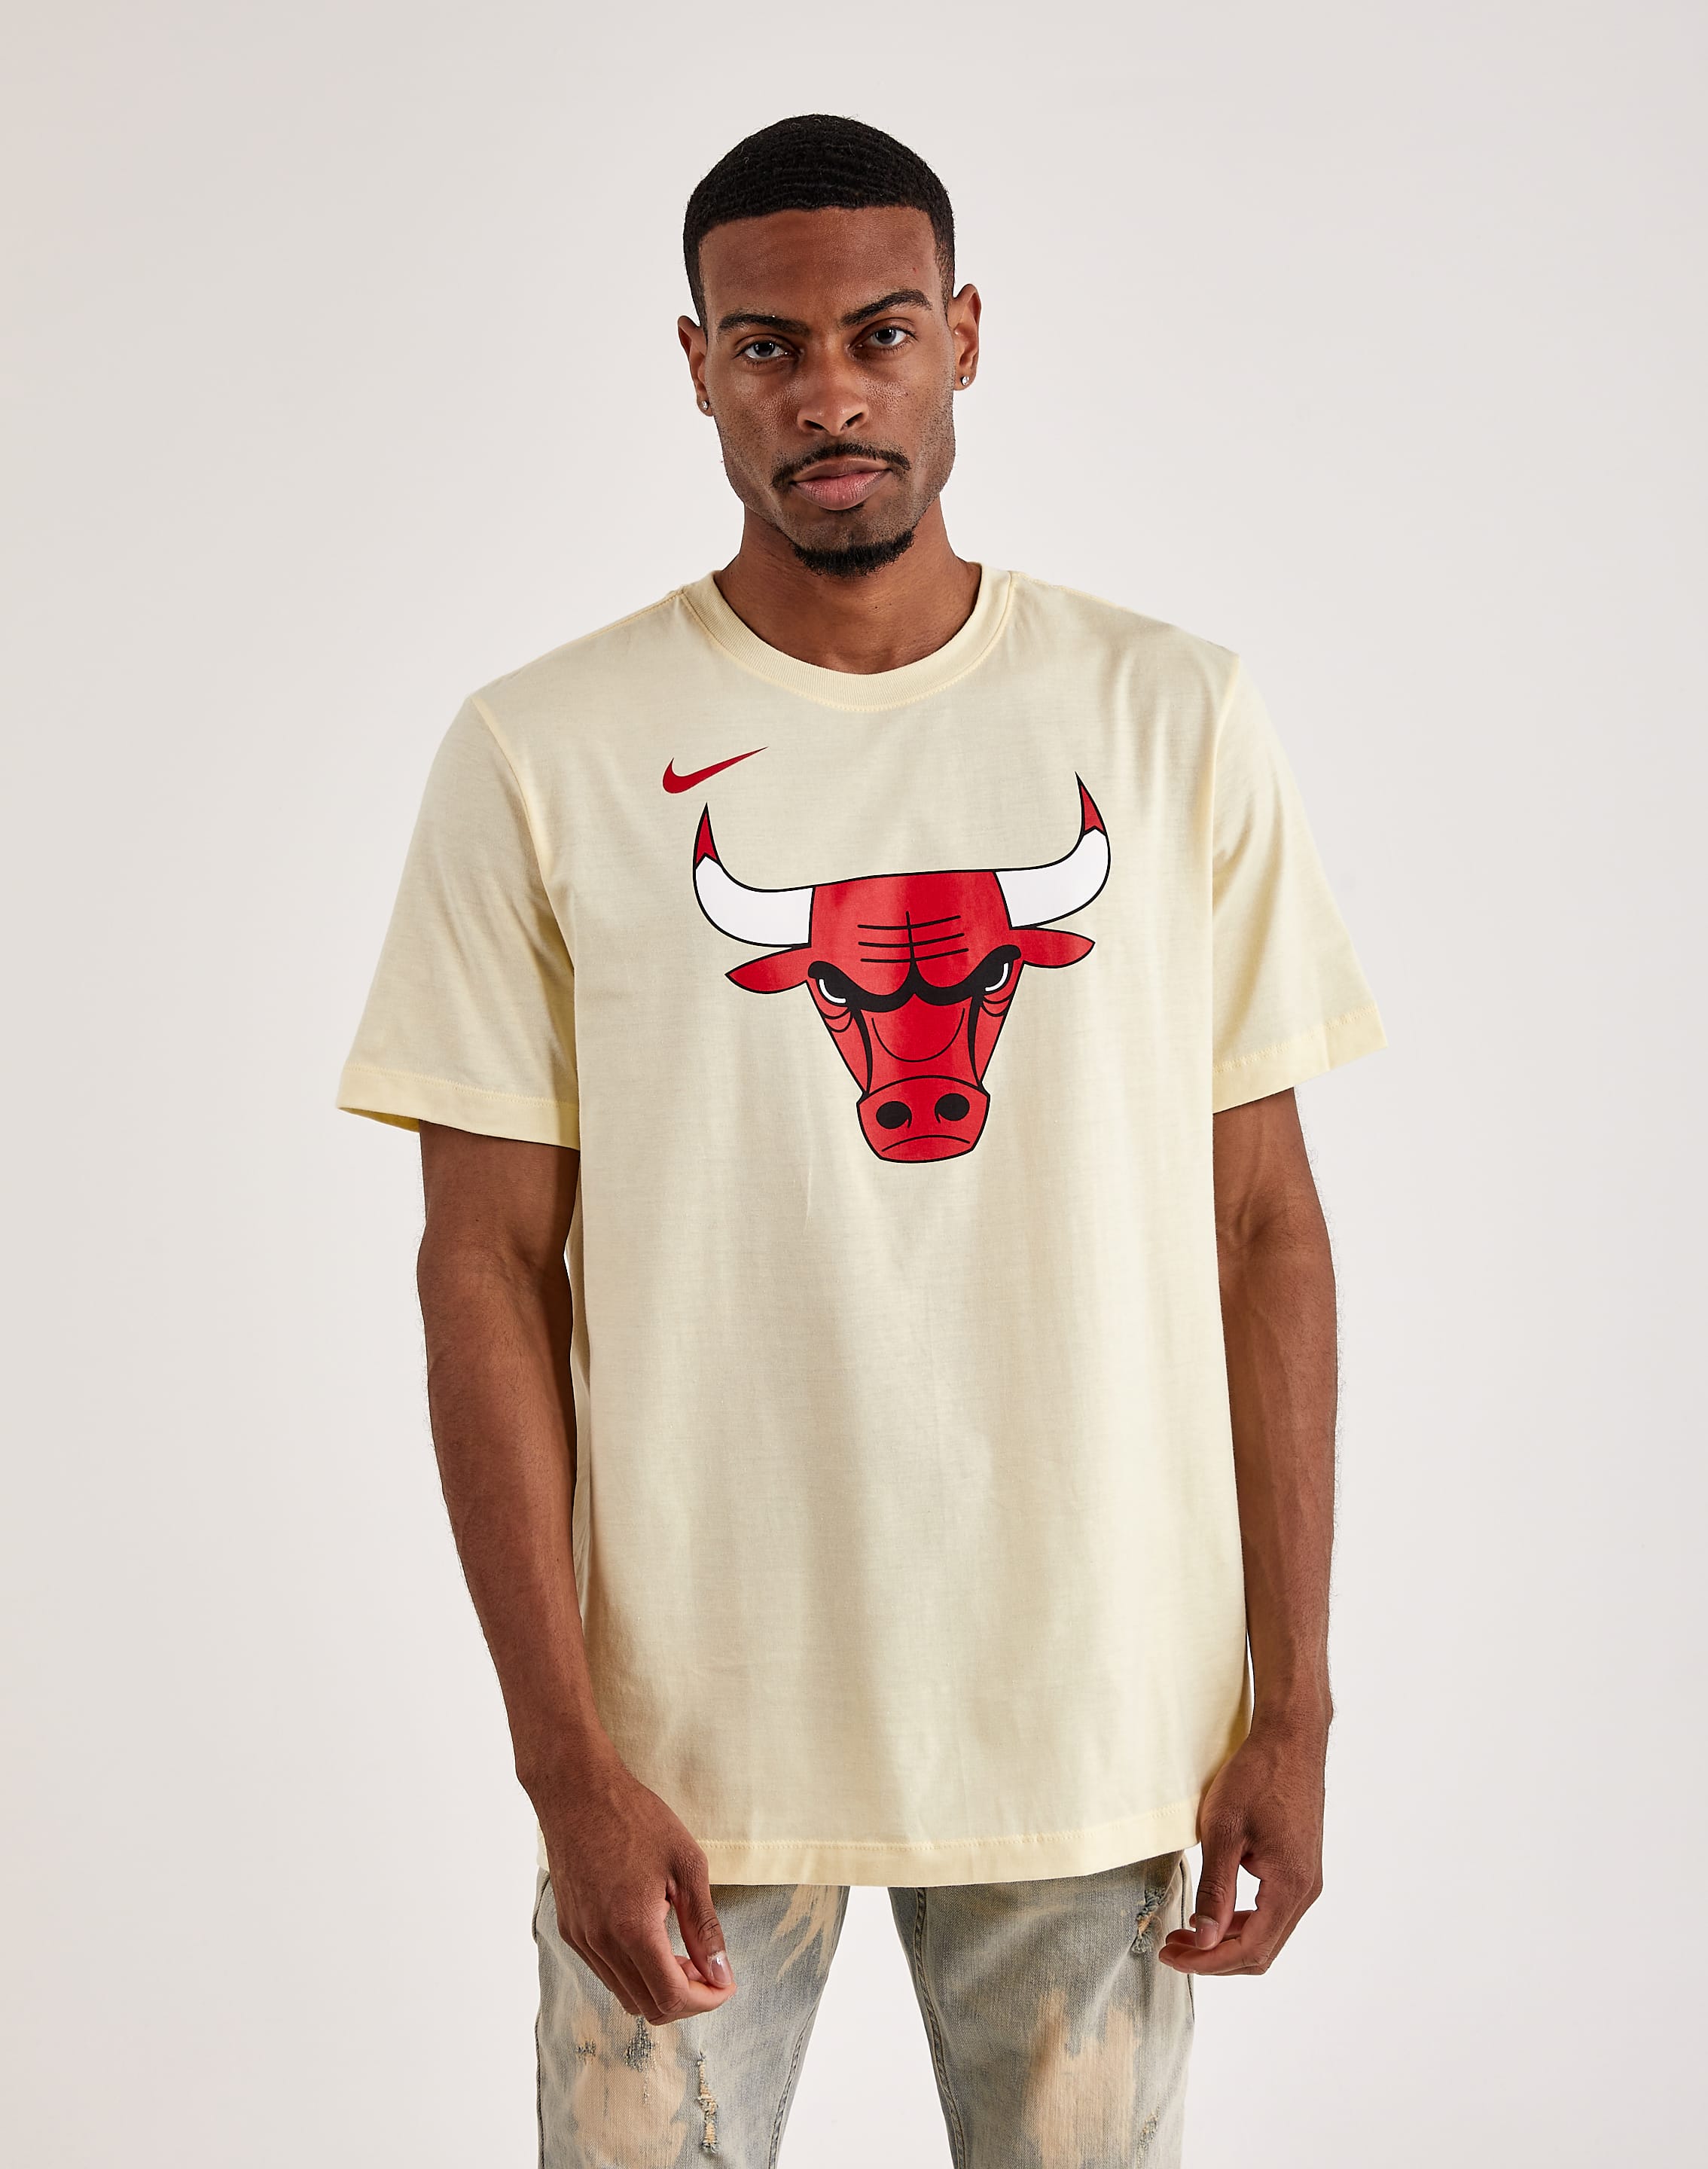 mens chicago bulls t shirt